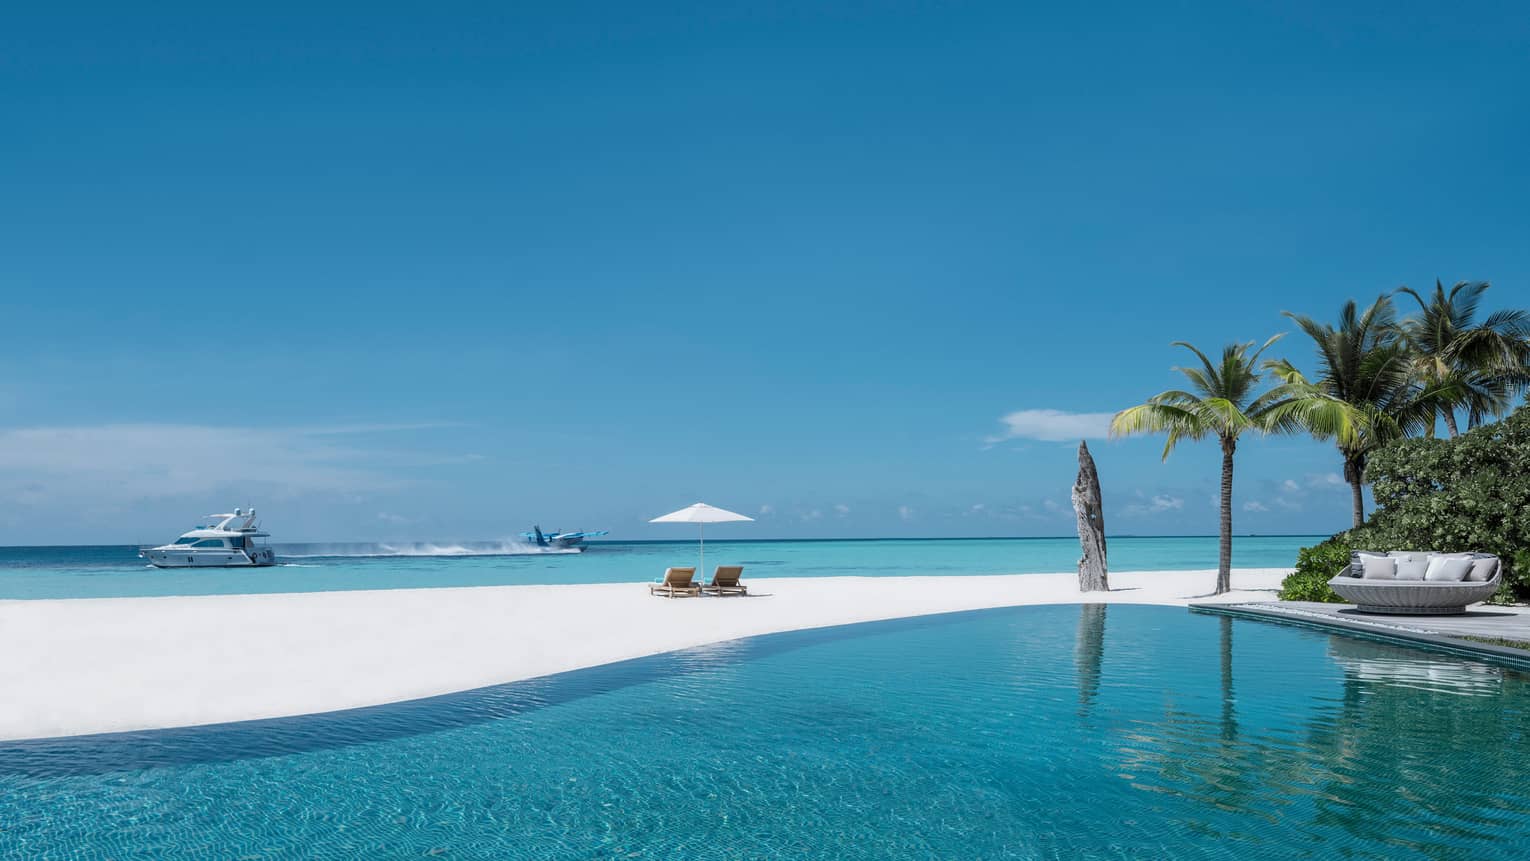 Infinity swimming pool by white sand beach, plane and catamaran boat in lagoon